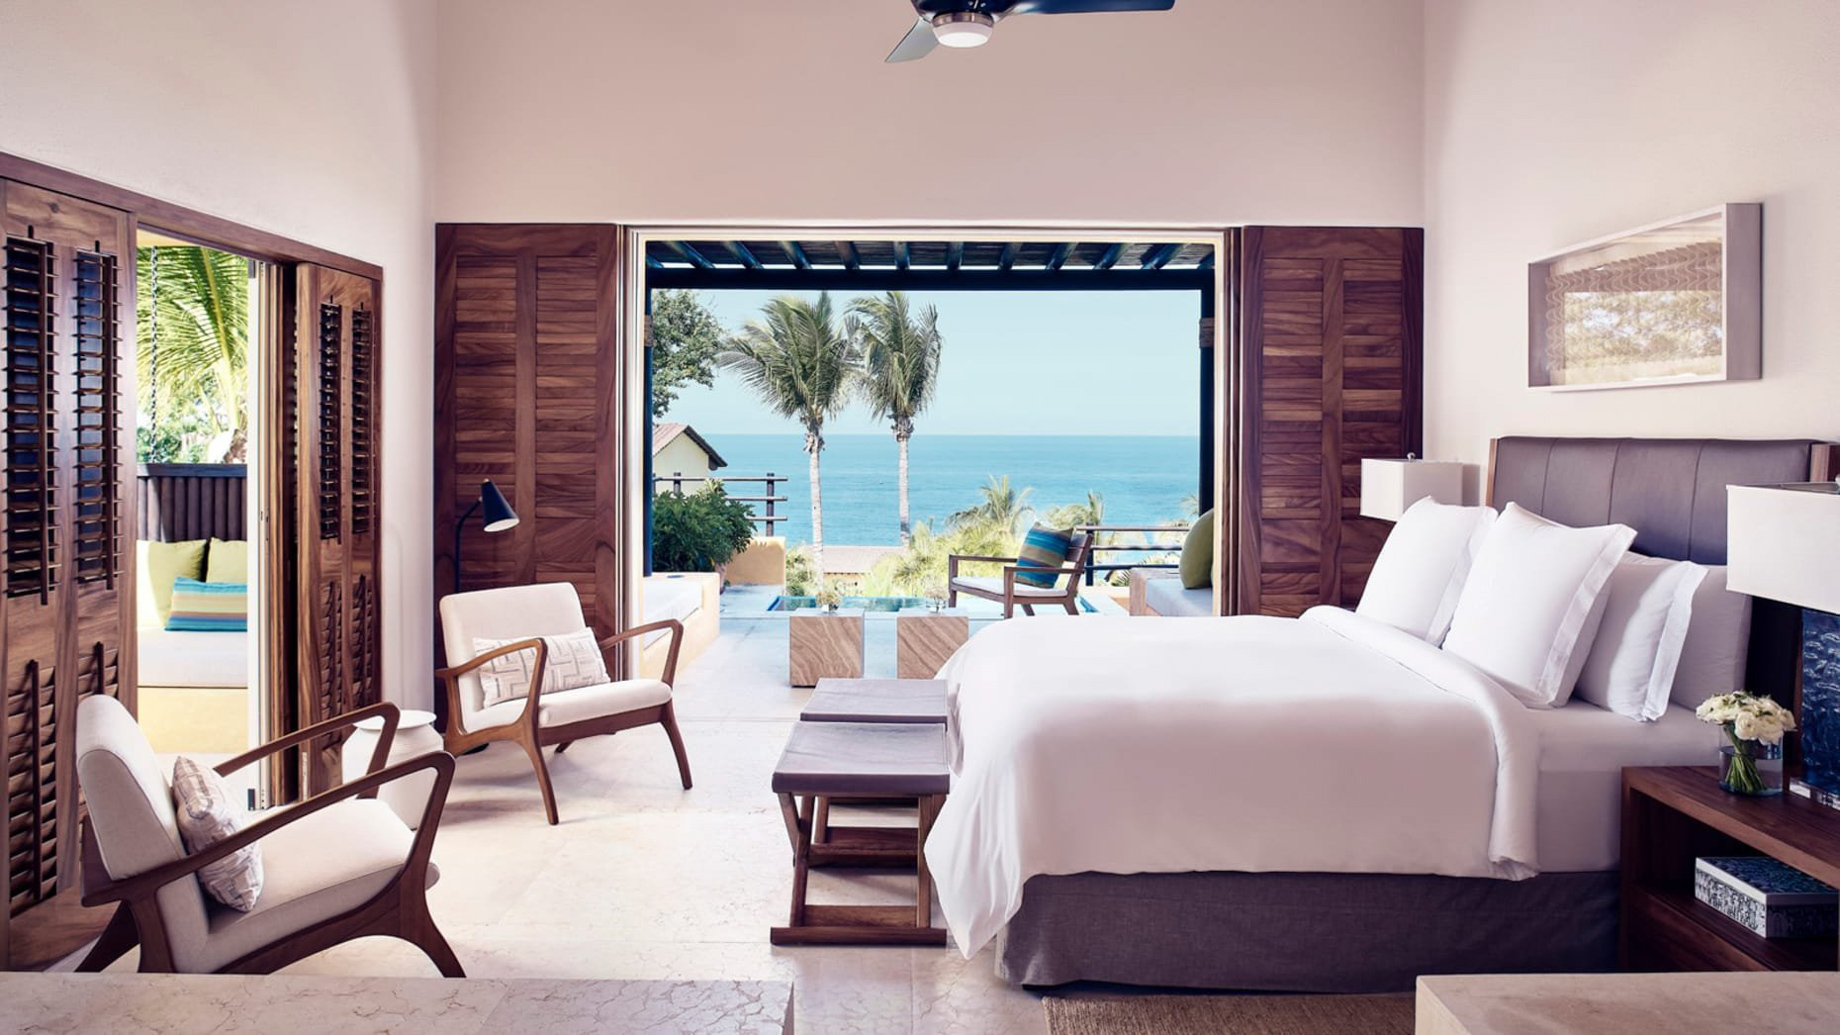 Four Seasons Resort Punta Mita – Nayarit, Mexico – Verano Ocean View Villa Master Bedroom